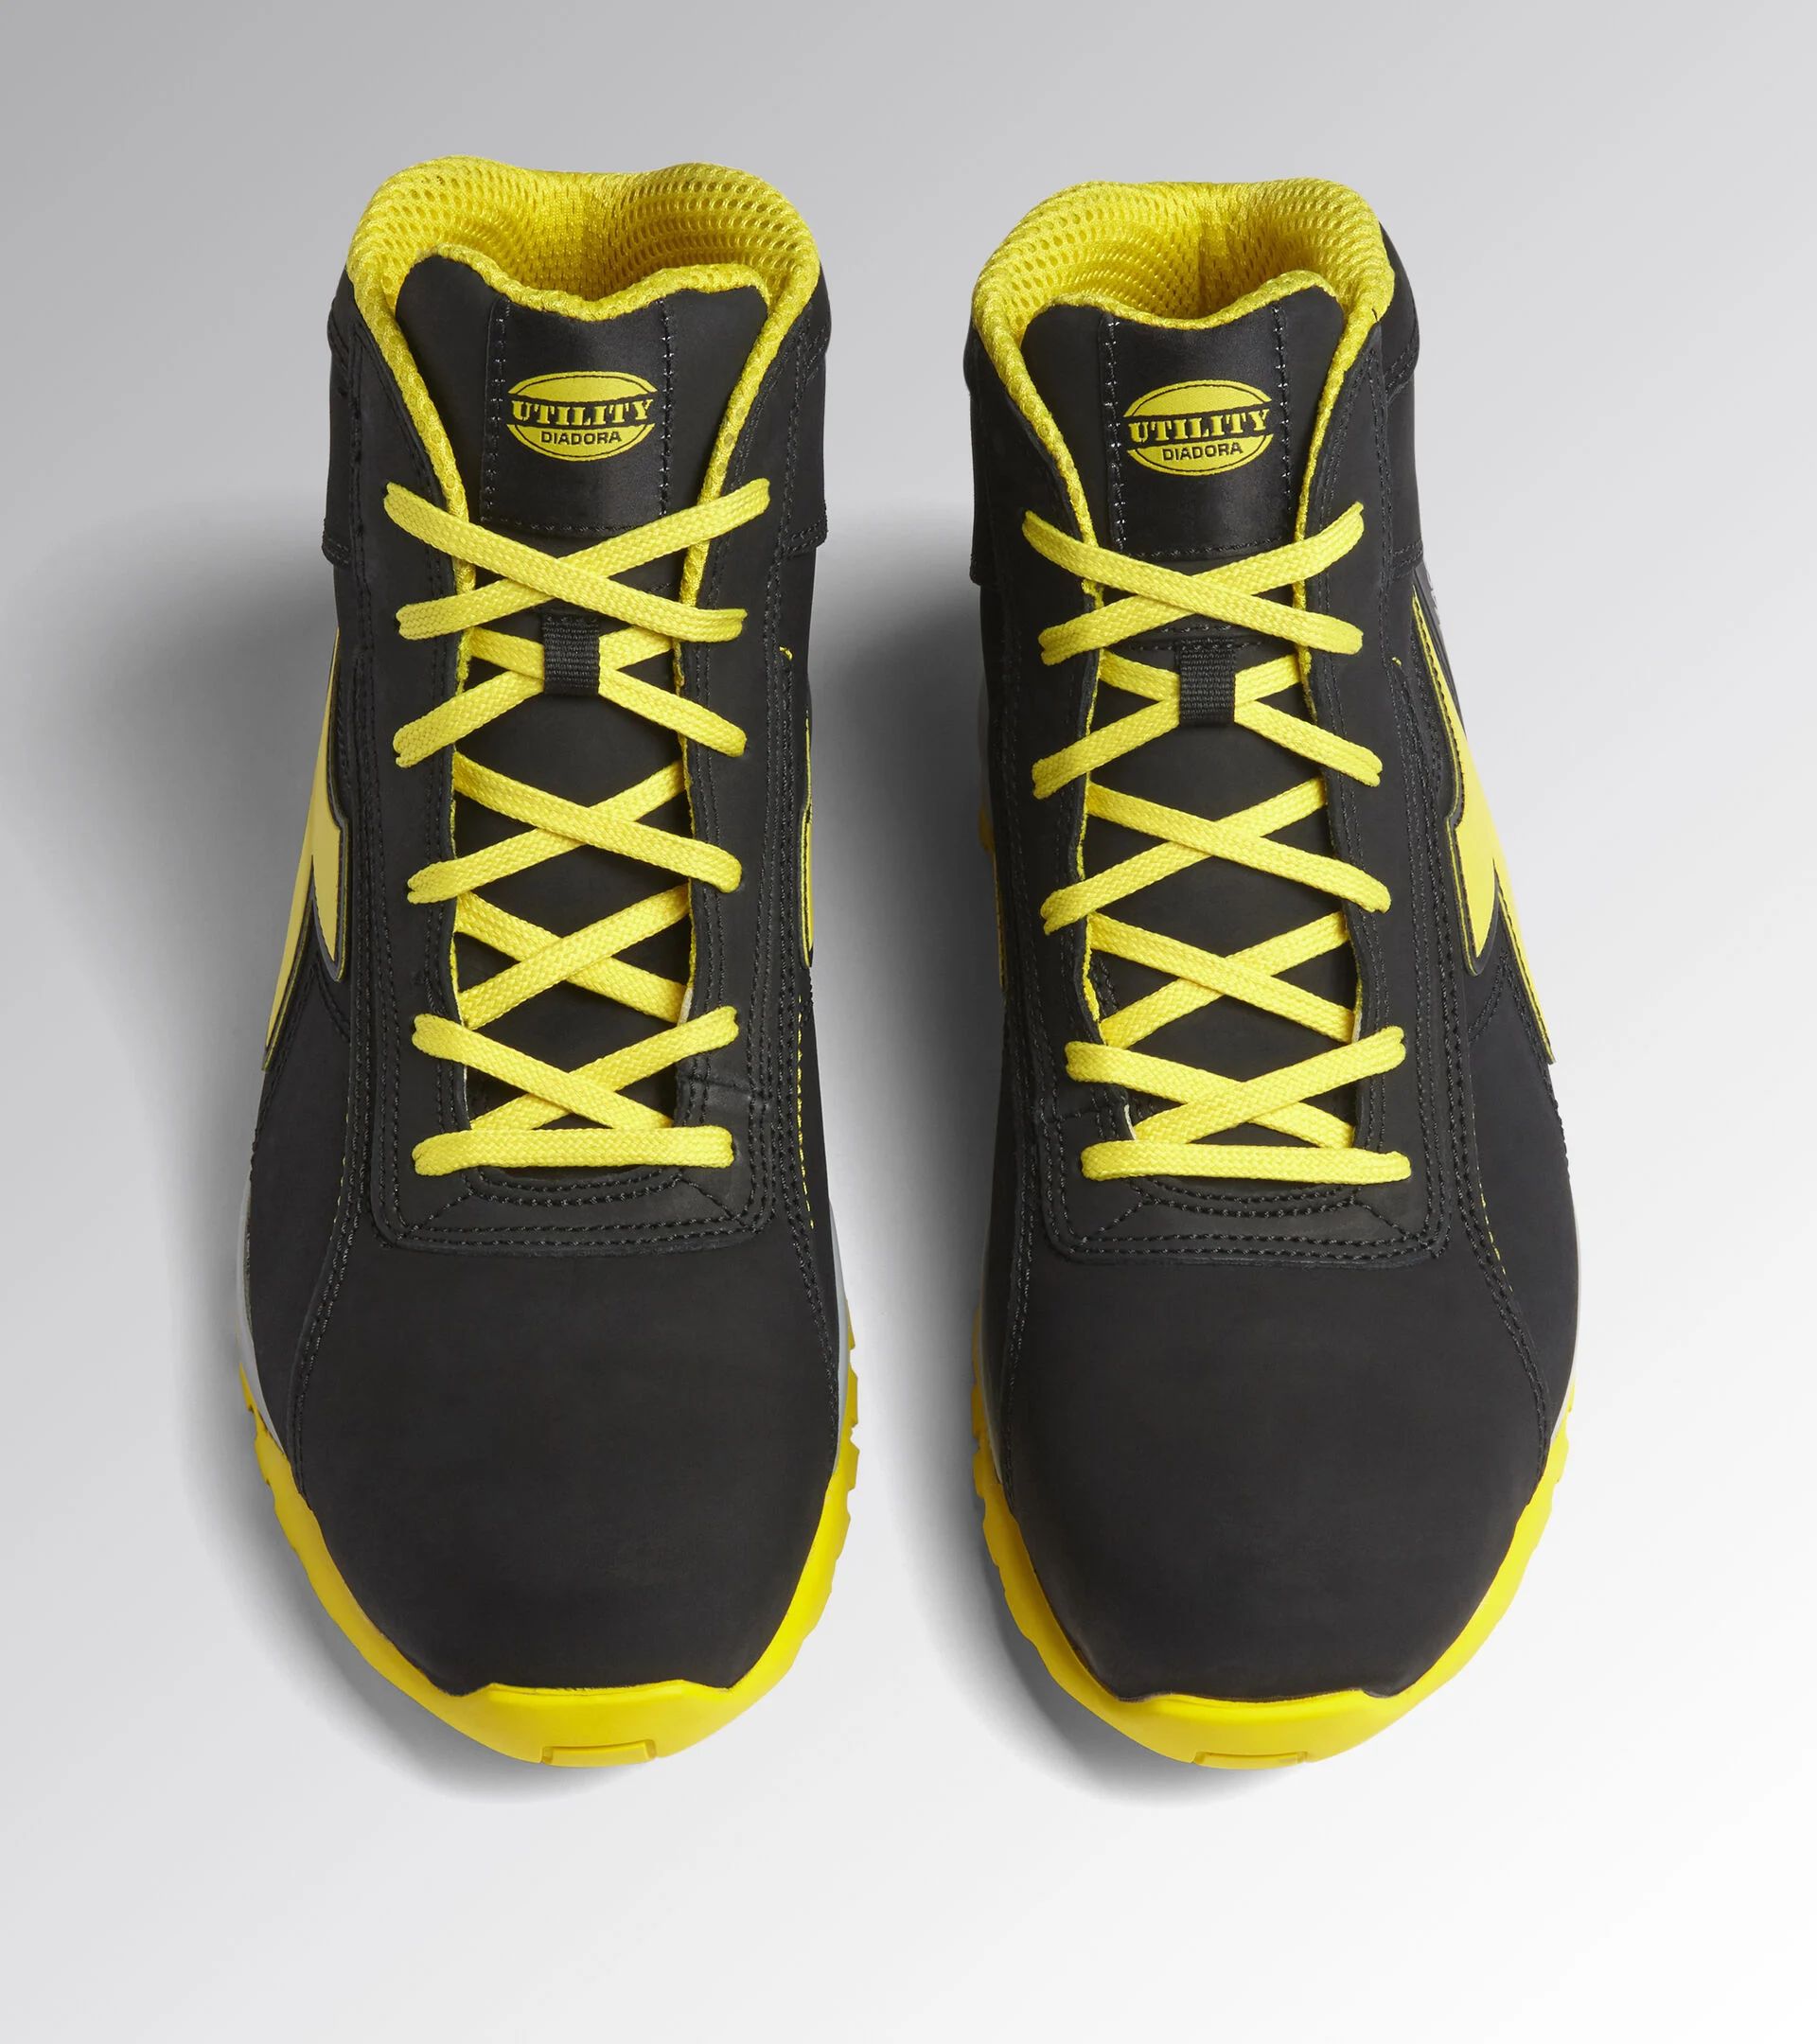 Glove safety shoes dark black/yellow fluo diadora